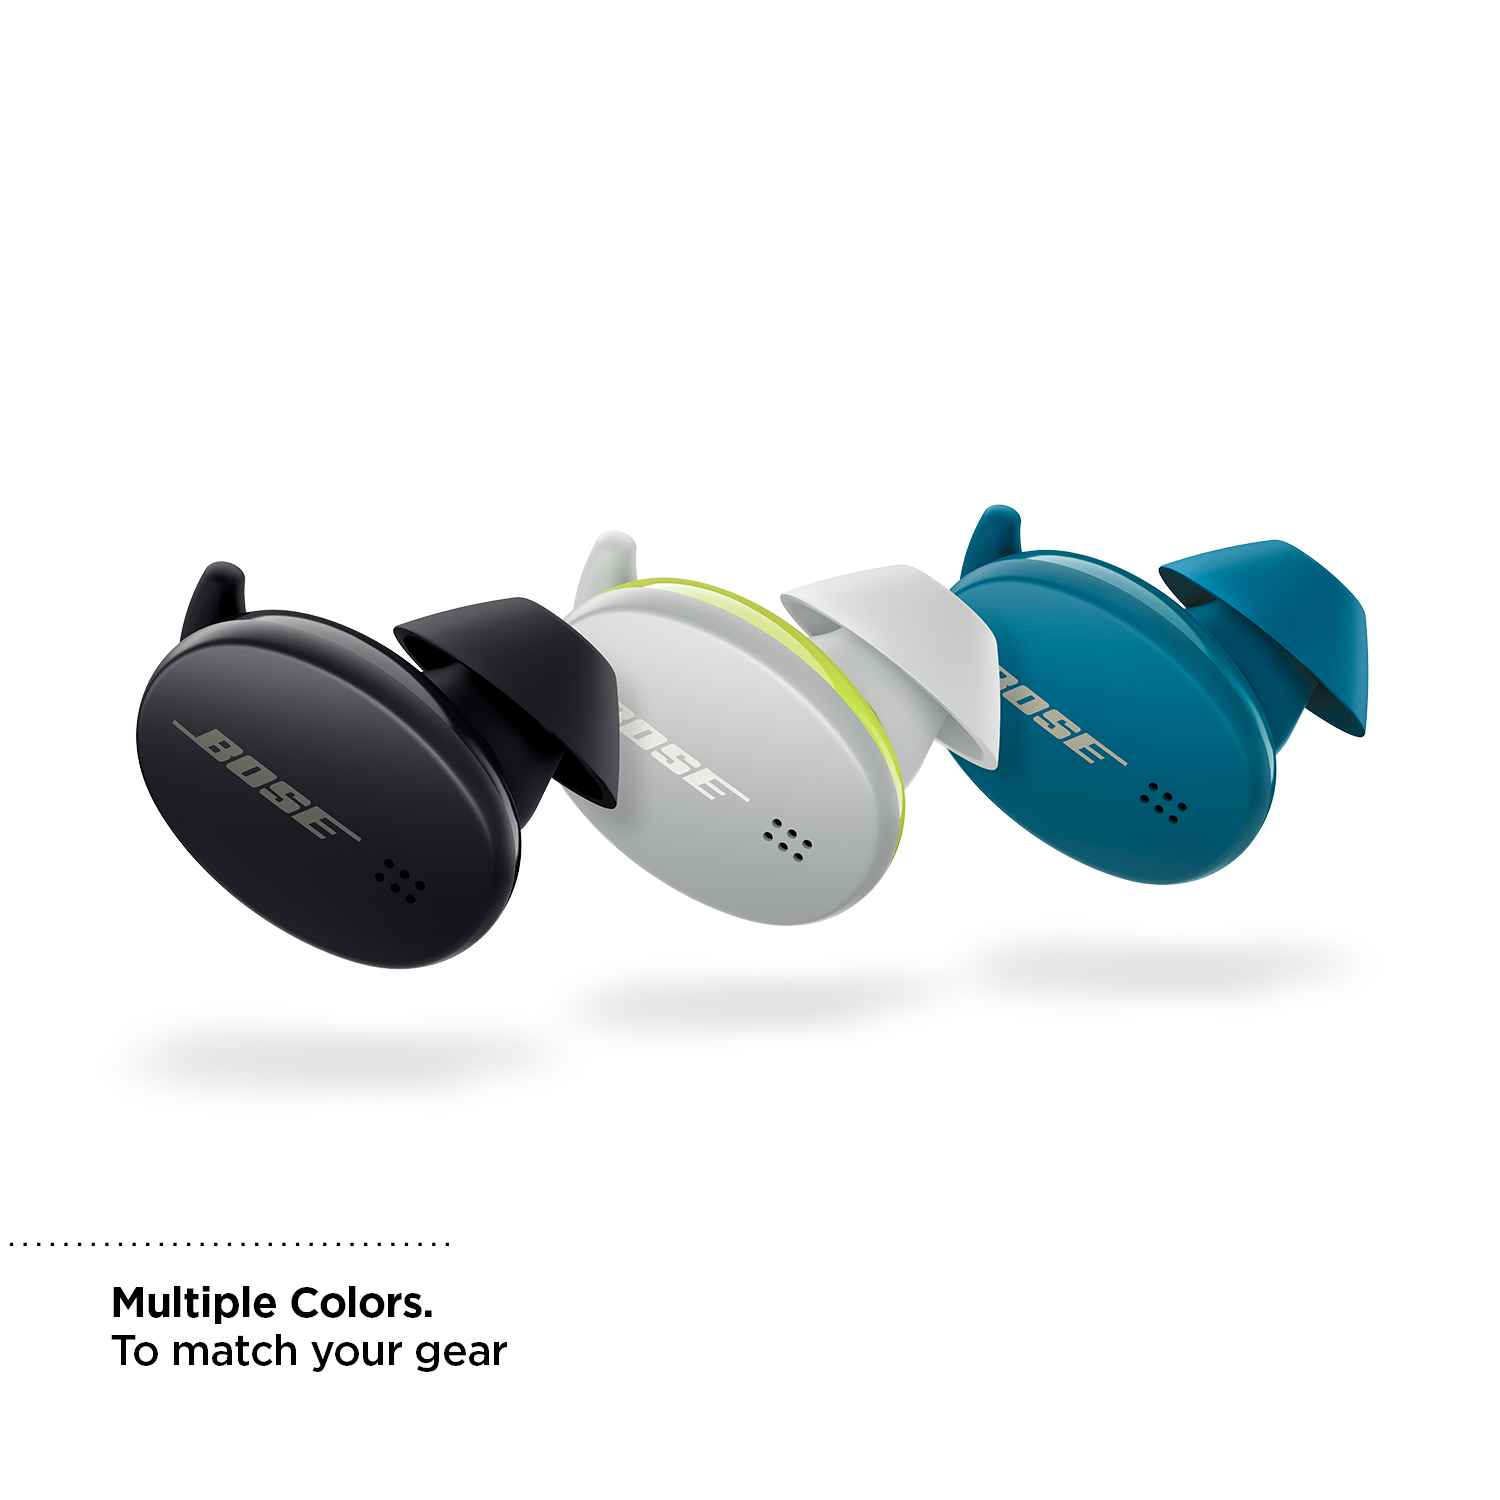 Bose Sport Earbuds True Wireless Bluetooth Headphones, Black - image 8 of 11